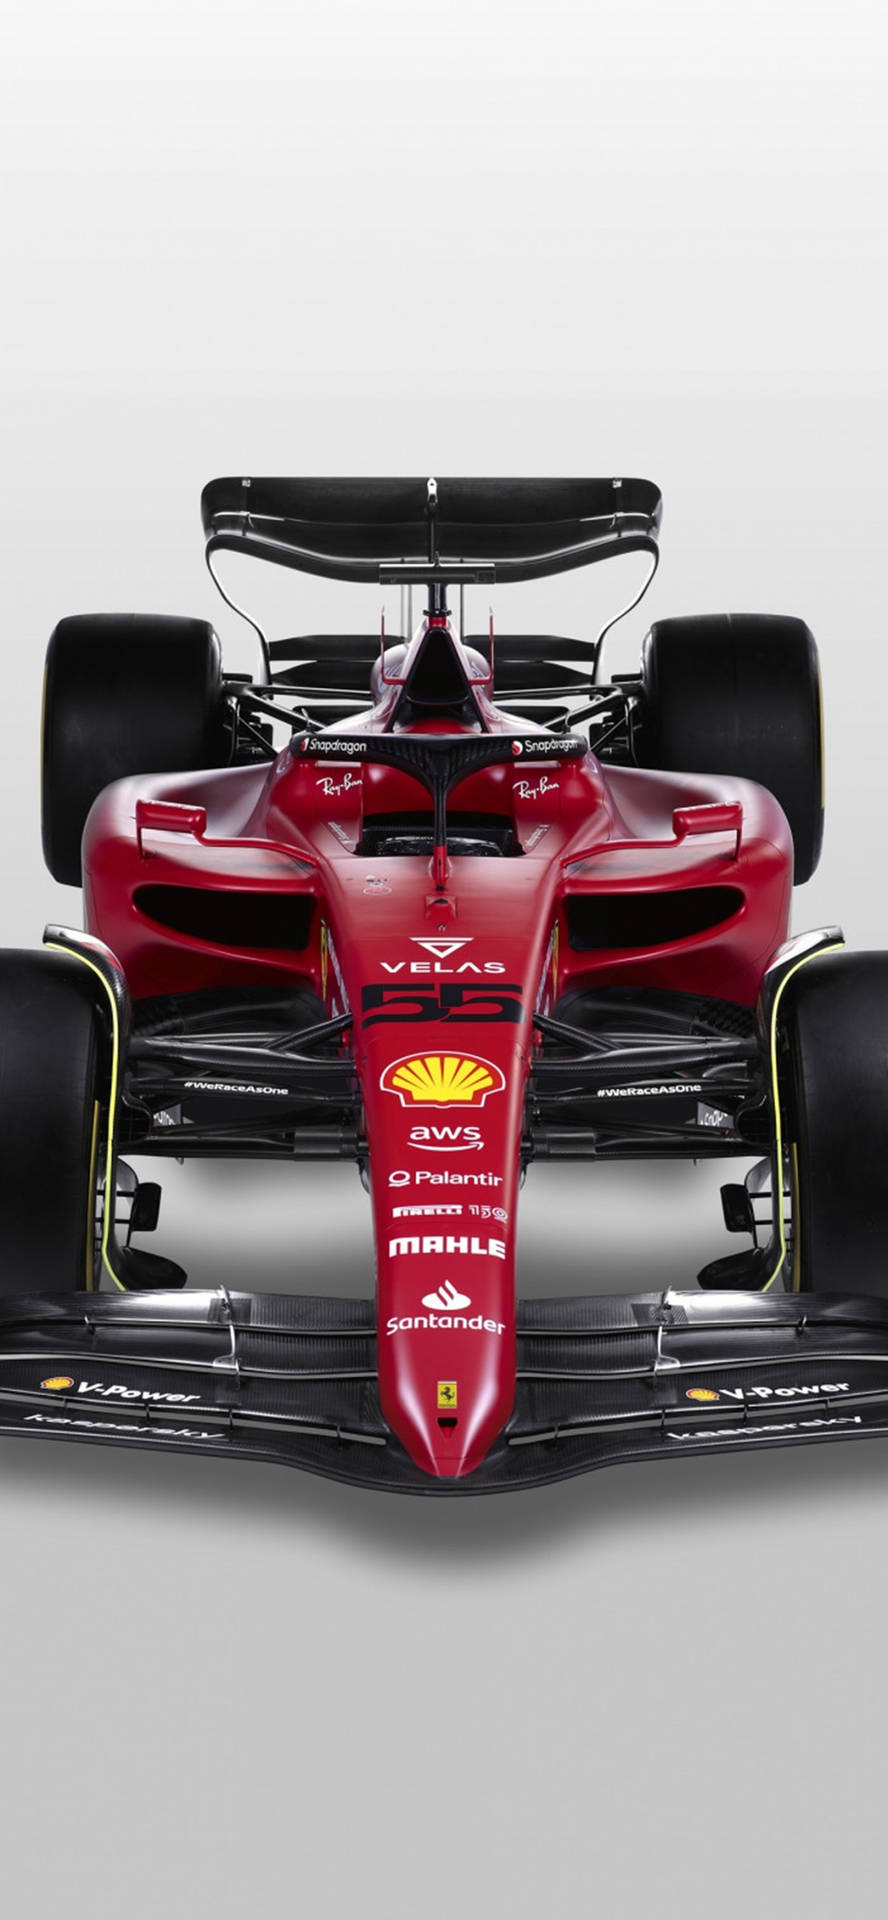 Model Car Ferrari Iphone Background